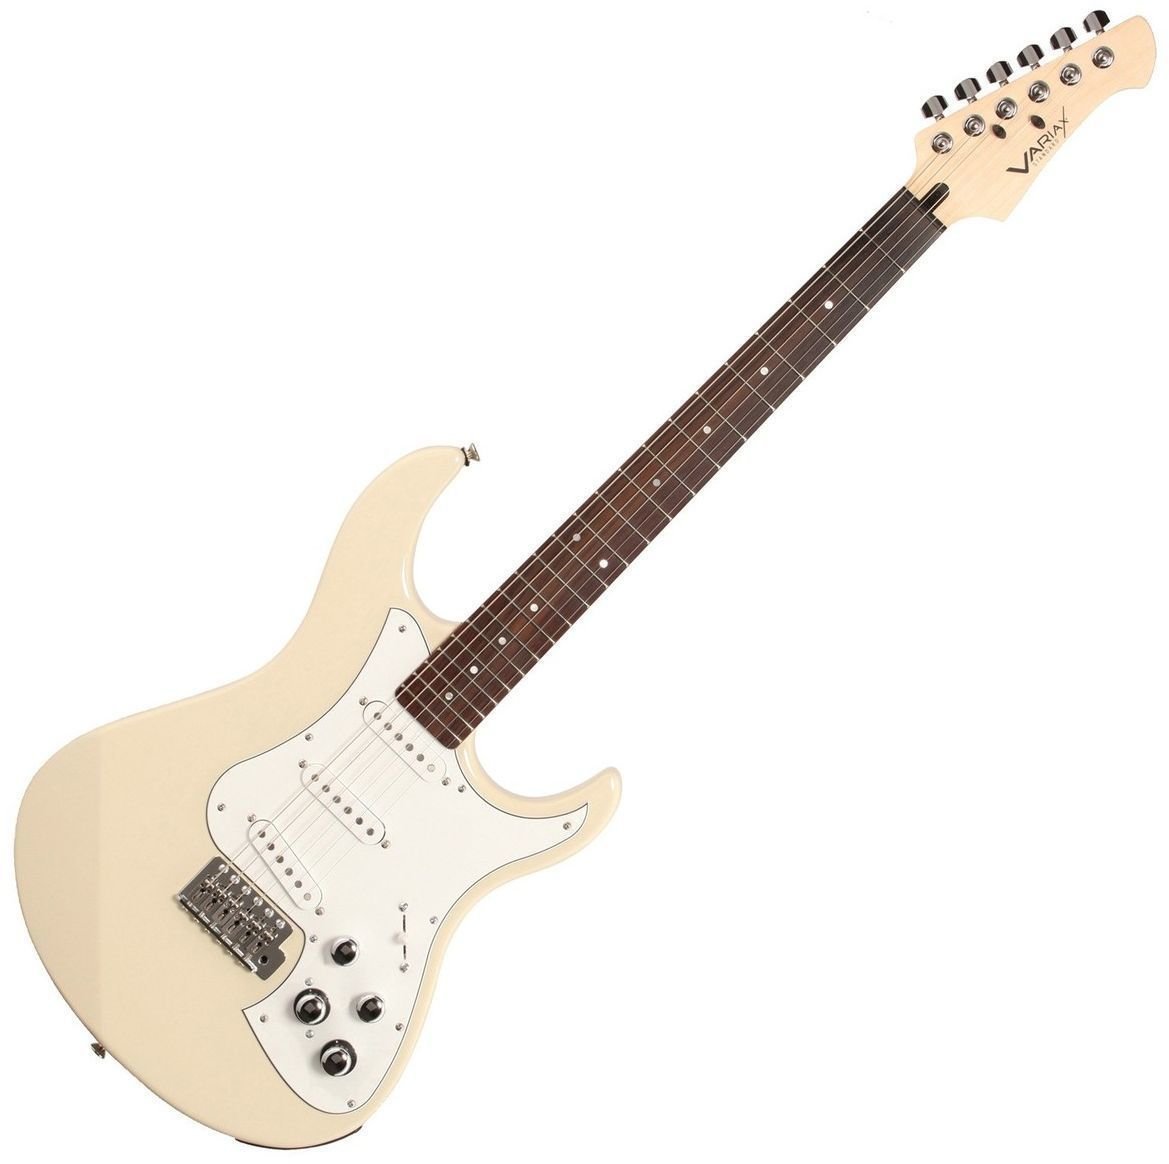 Guitarra elétrica Line6 Variax Standard White